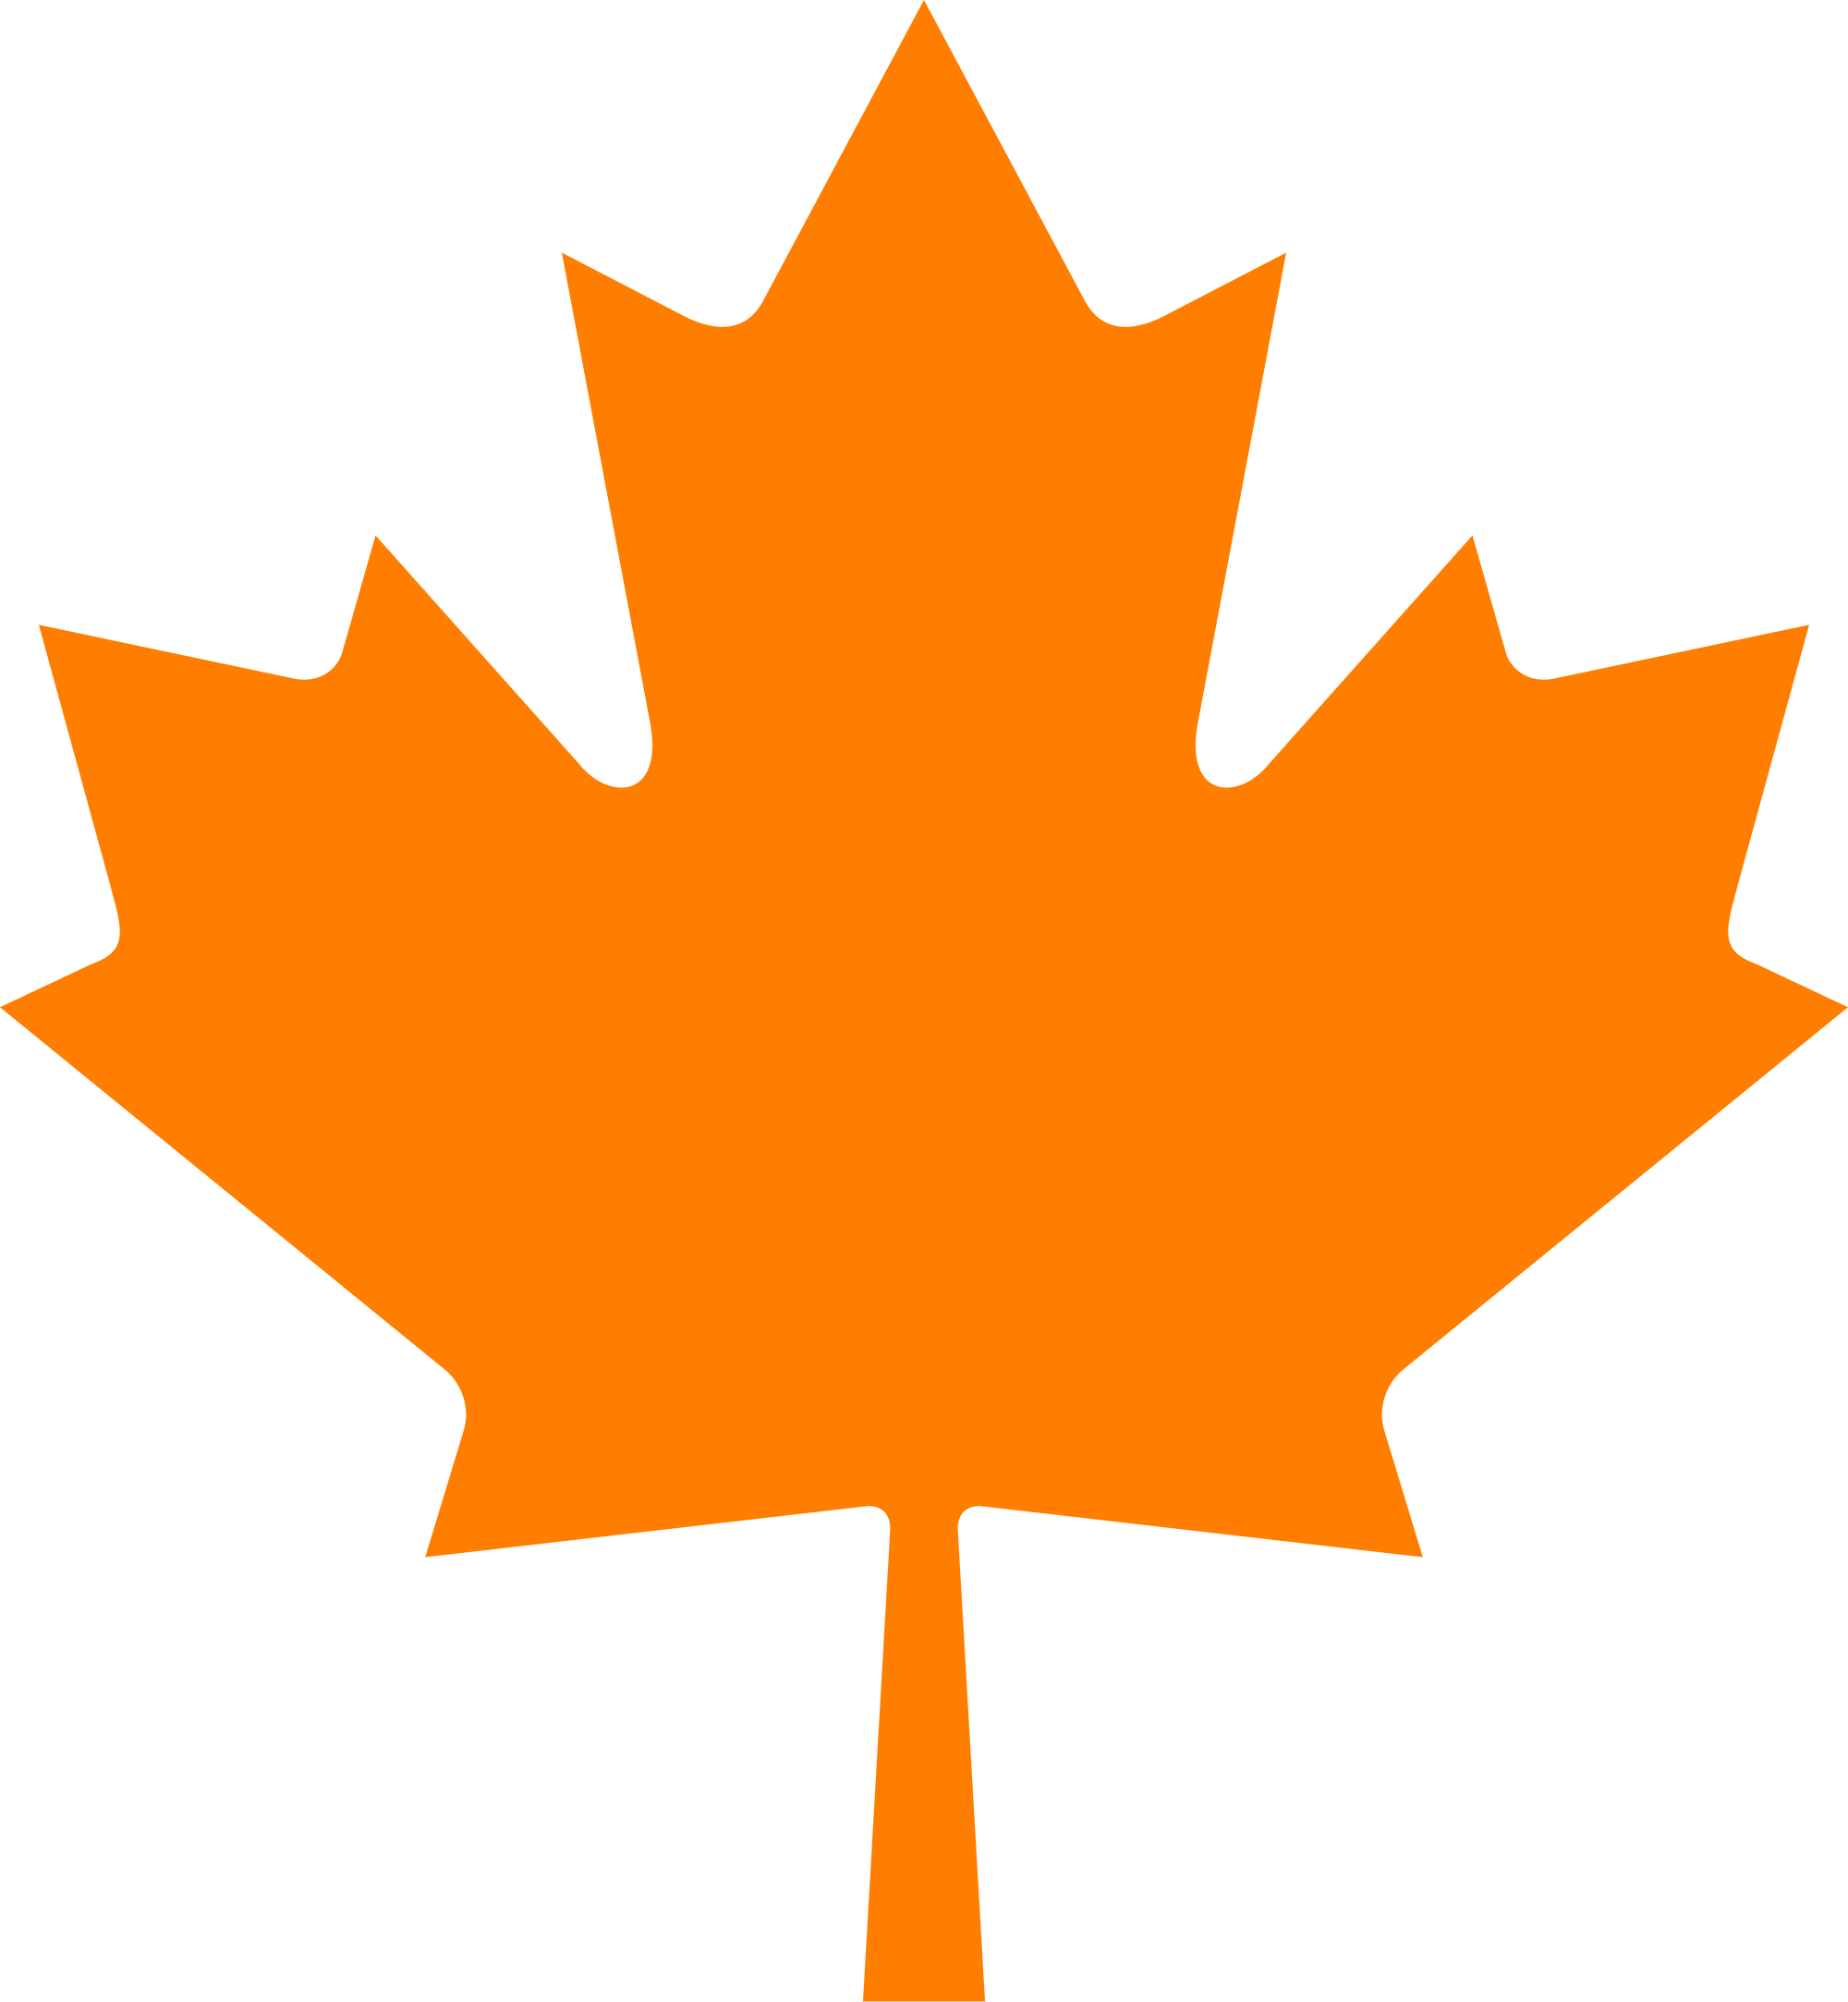 File:Orange Maple Leaf.svg - Wikimedia Commons